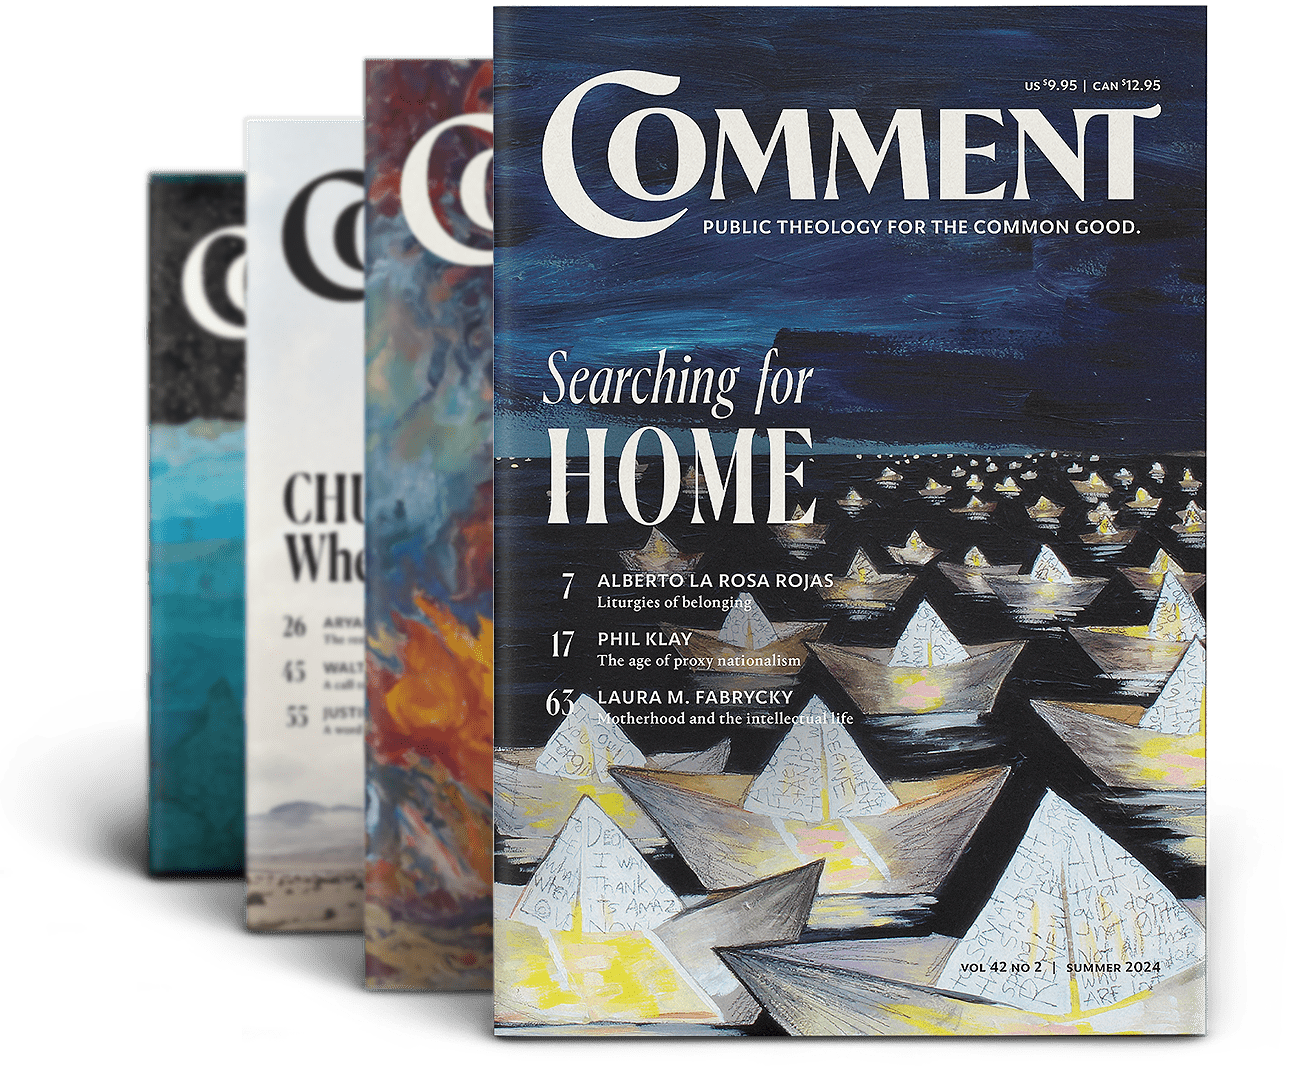 Recent Comment magazine covers